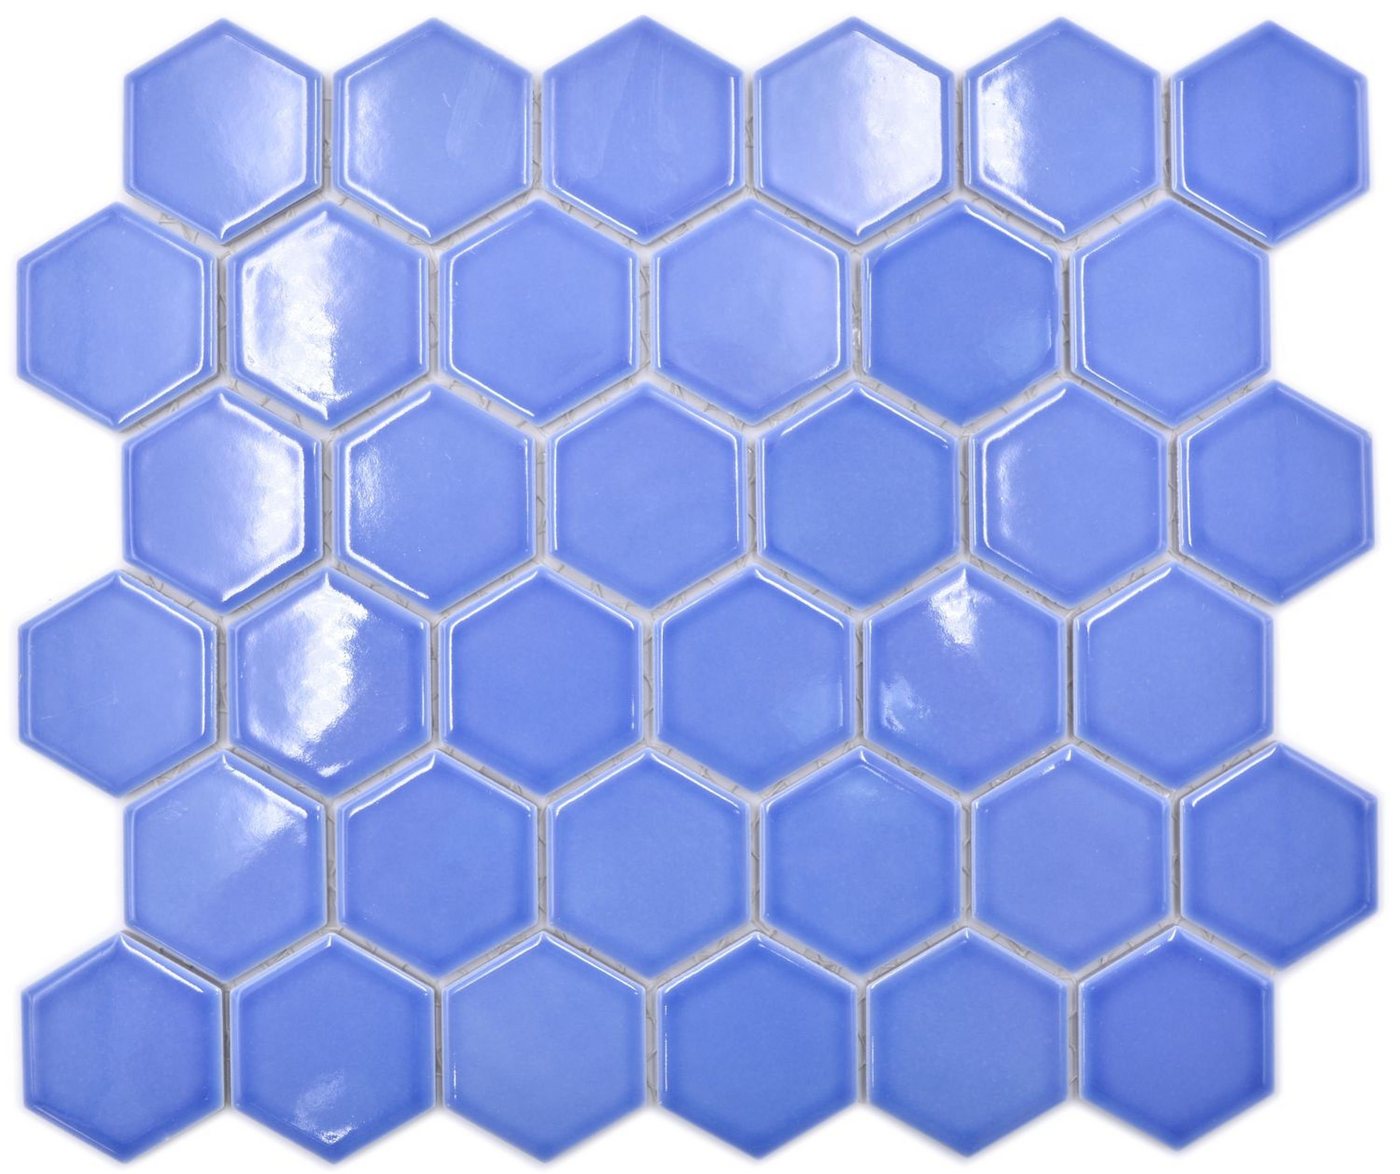 Mosani Mosaikfliesen Keramikmosaik Mosaikfliesen hellblau glänzend / 10 Mosaikmatten von Mosani